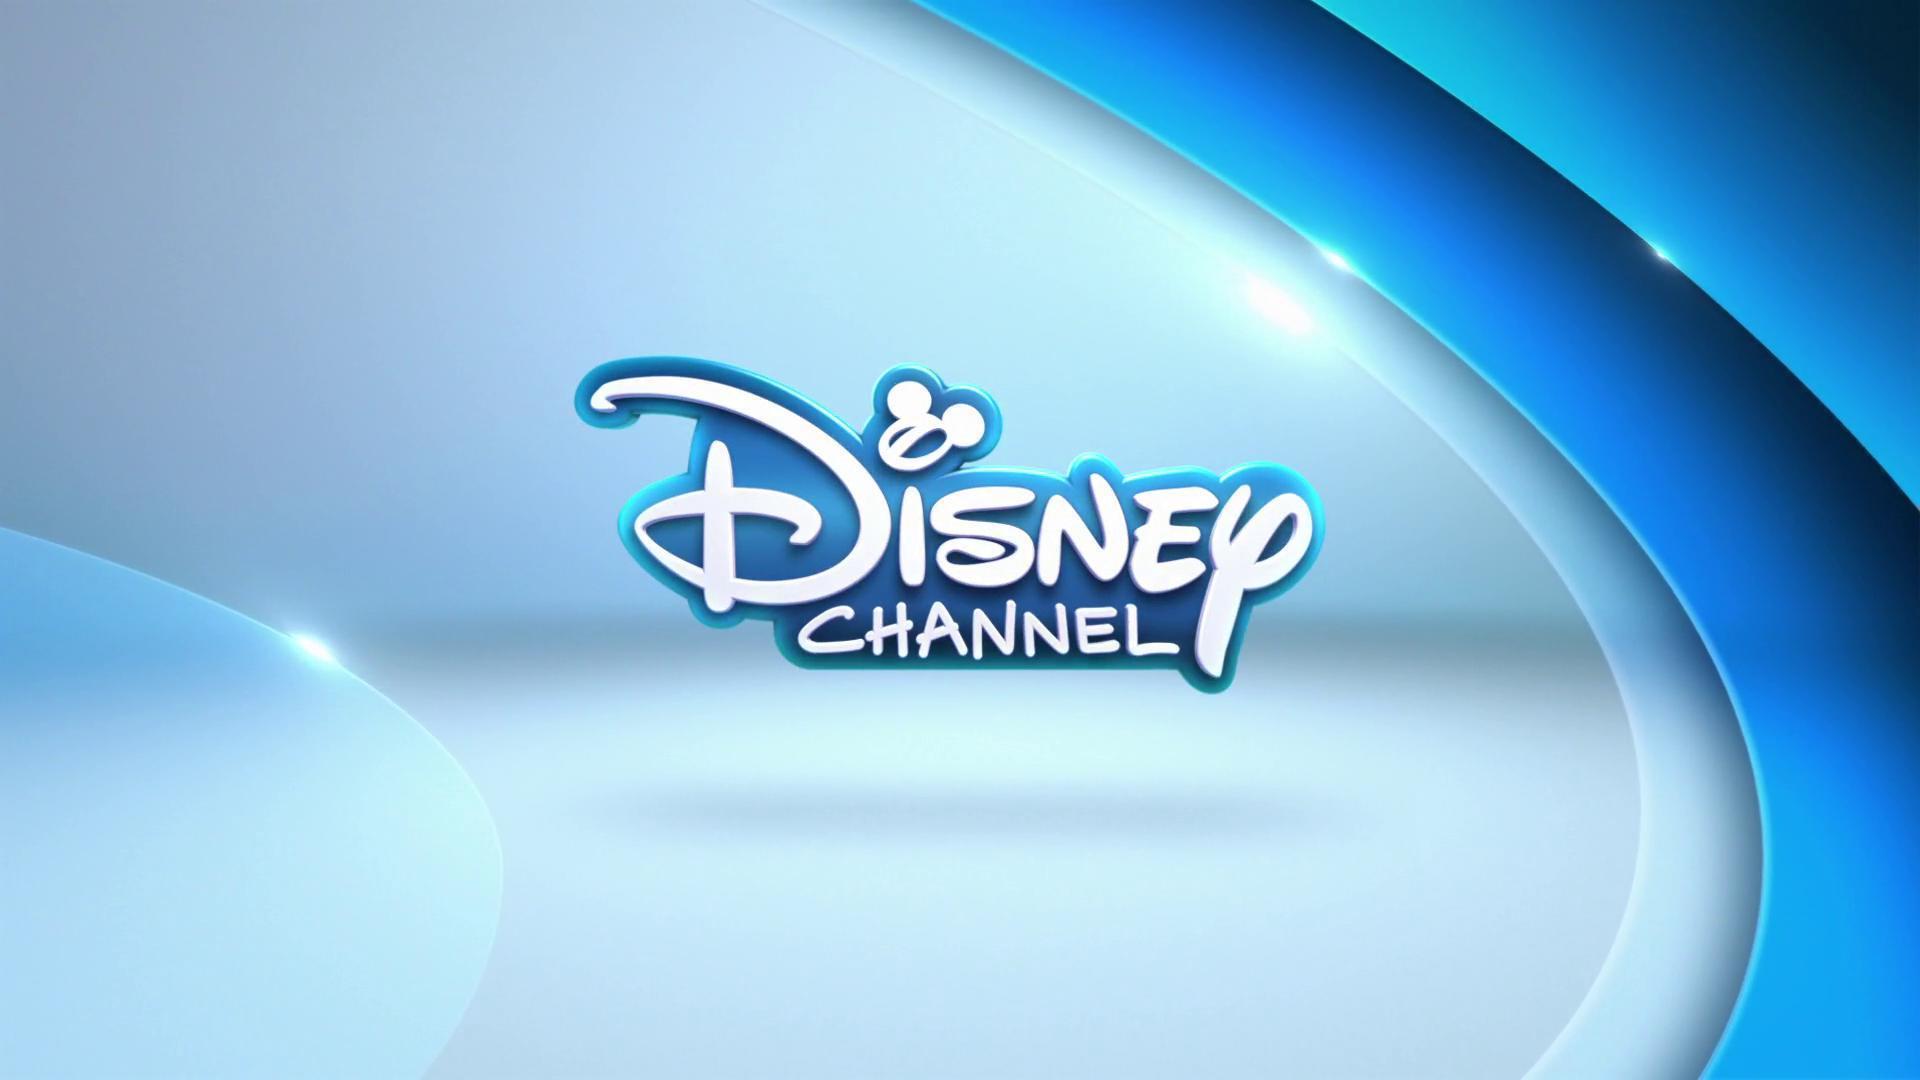 Disney Channel Original Movie, the logo and branding site